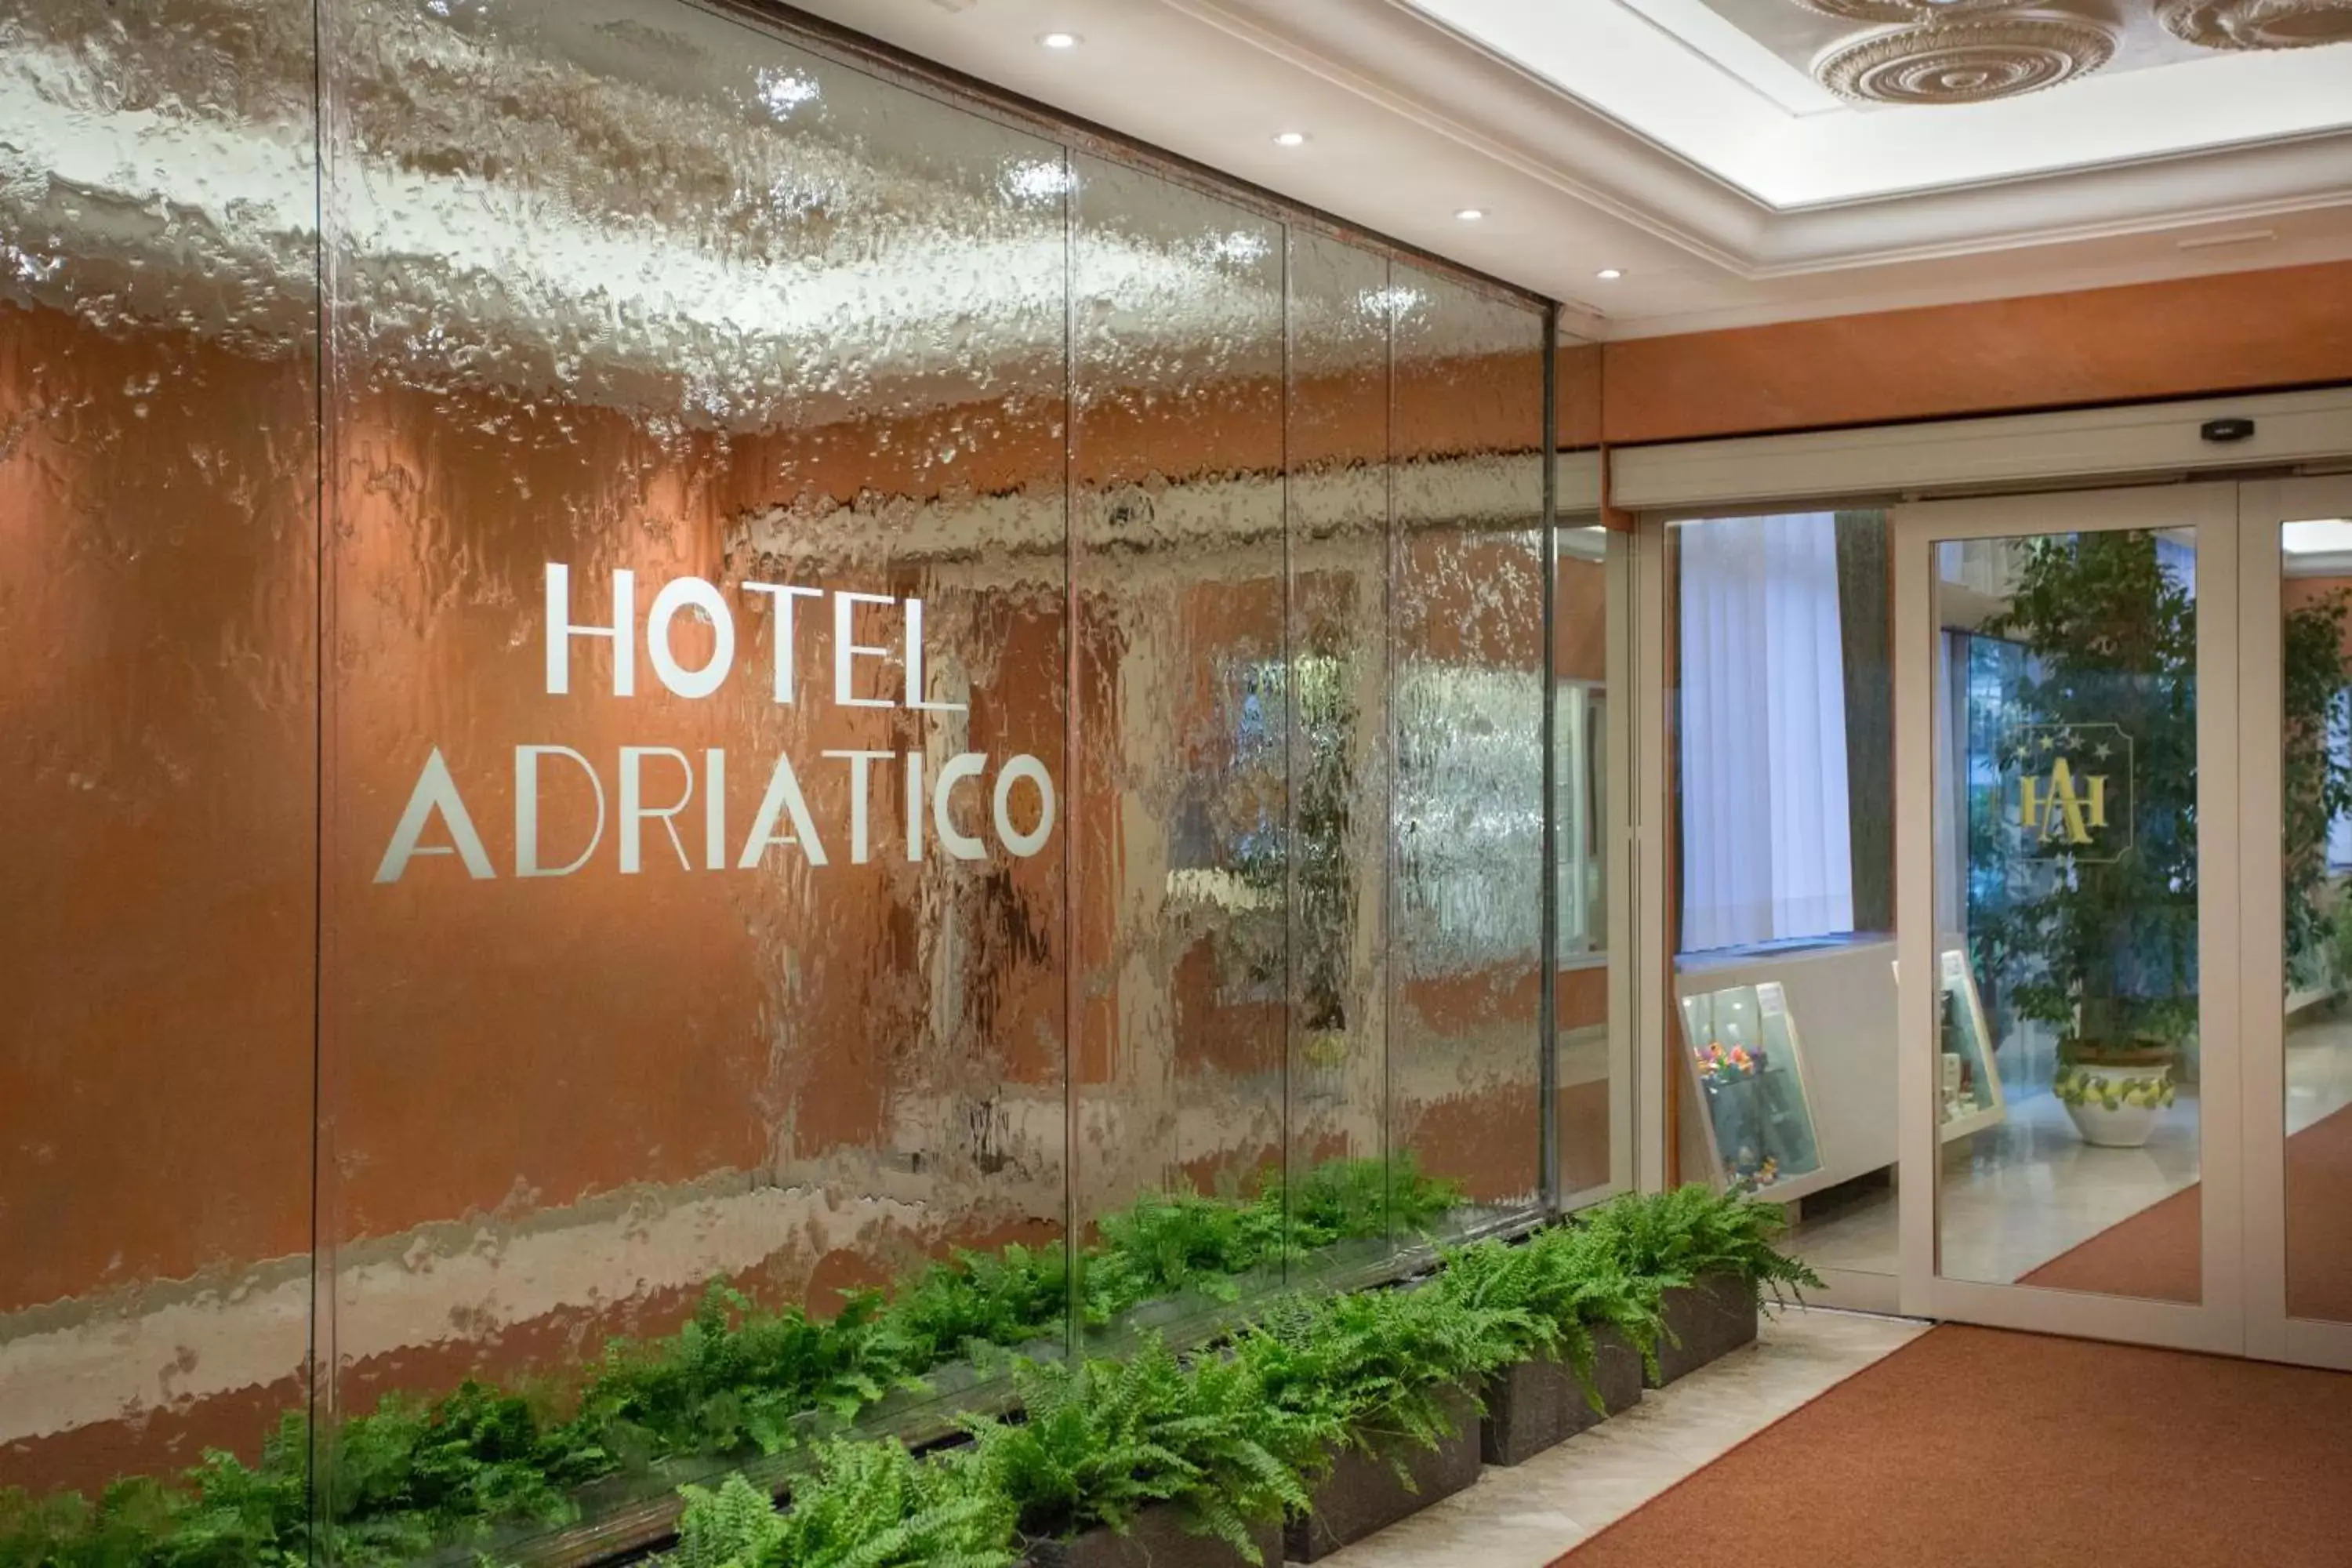 Lobby or reception in Grand Hotel Adriatico